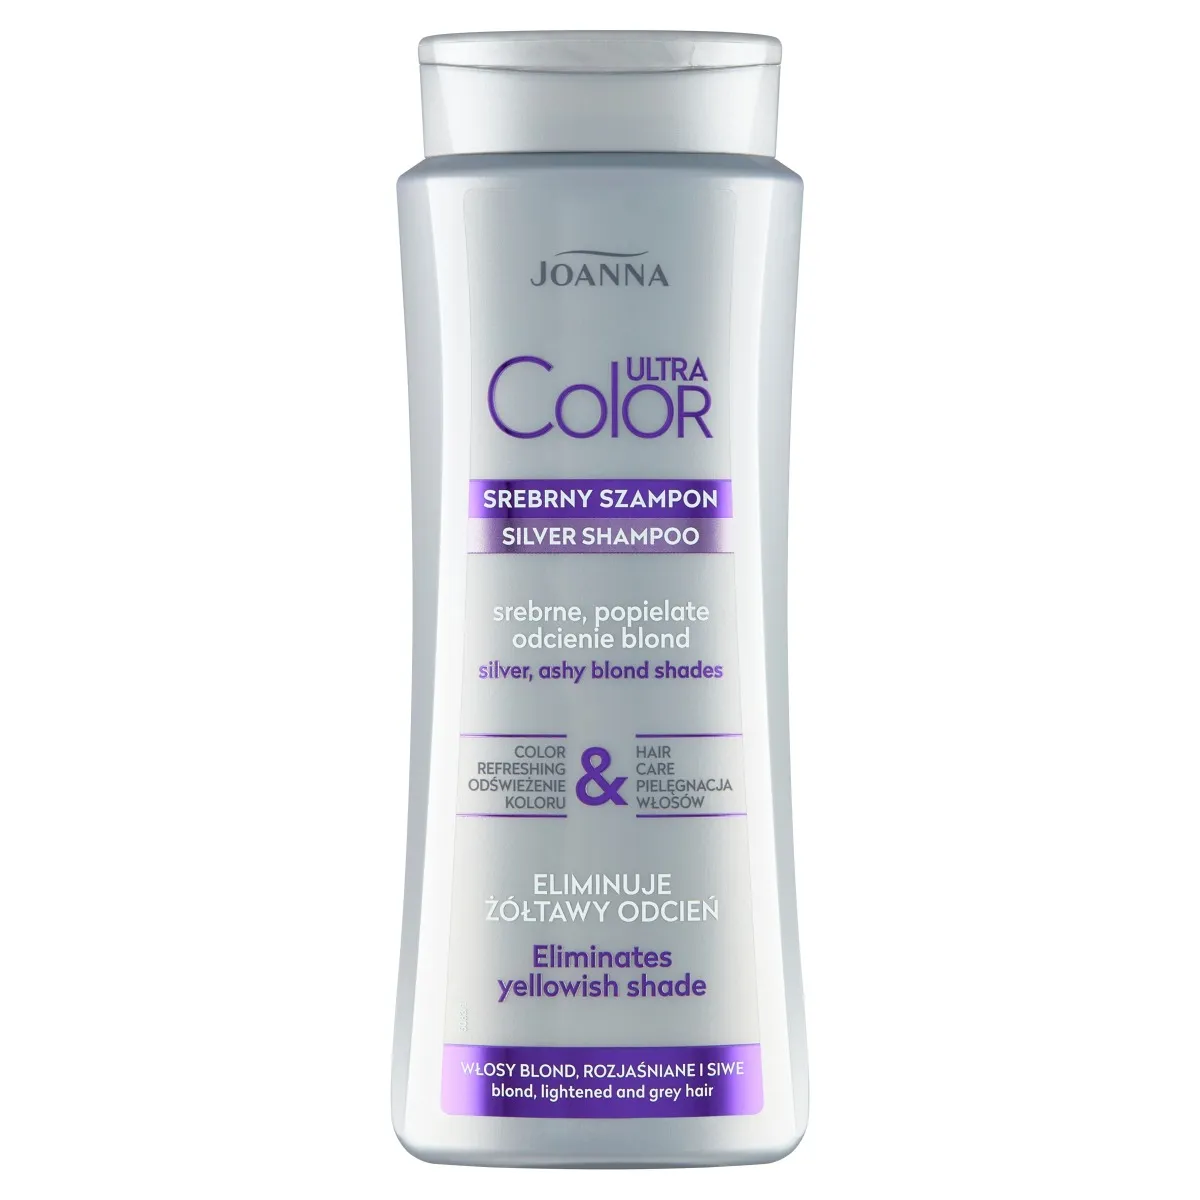 joanna professional szampon czy ultra color joanna